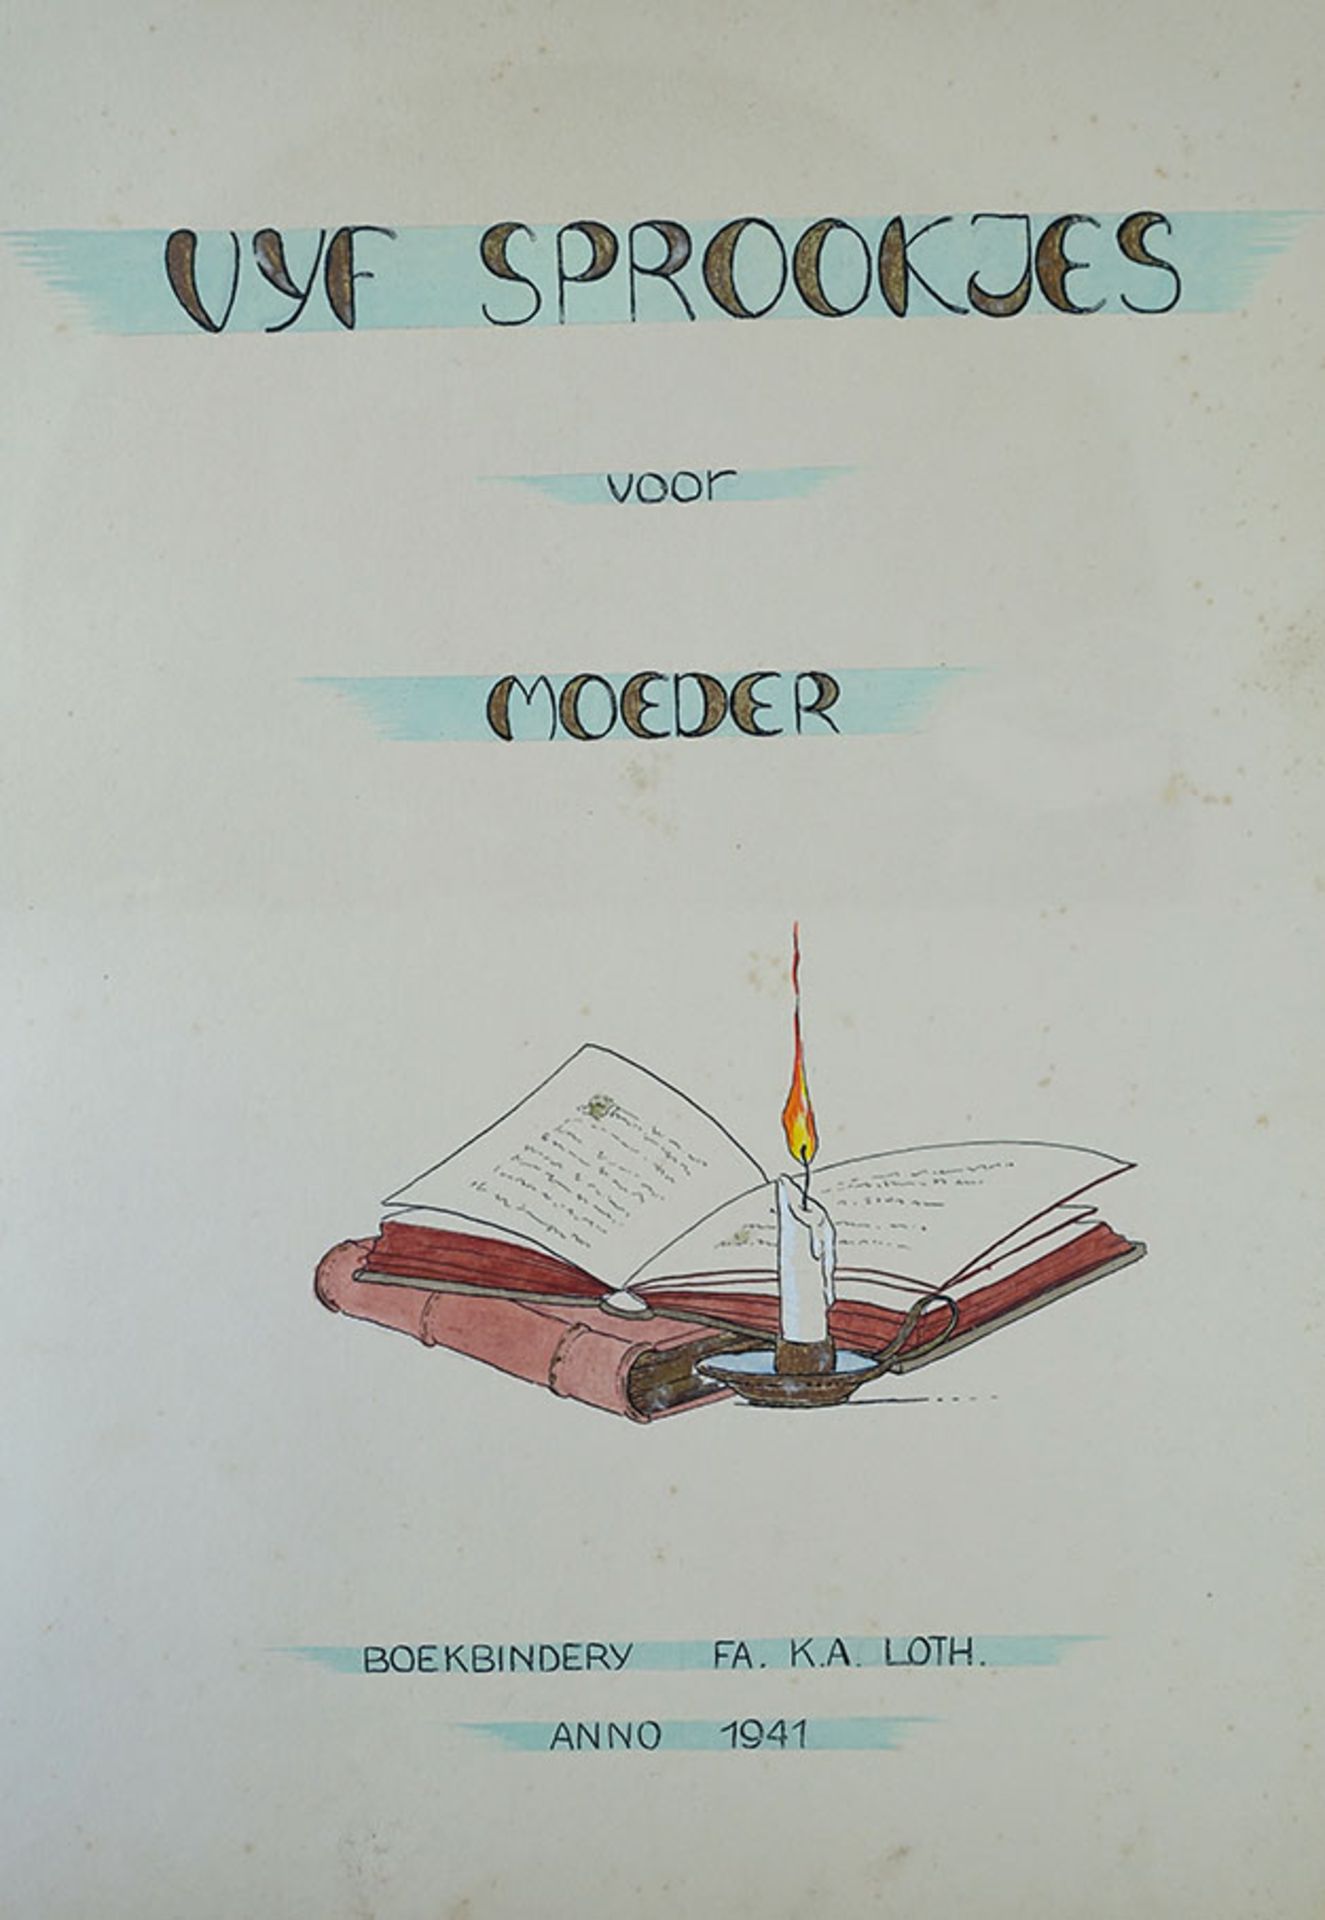 STEINMEYER (?) -- "VIJF SPROOKJES VOOR MOEDER. Boekbinderij Fa. K.A. Loth, 1941". 25 pp. Fairy tale